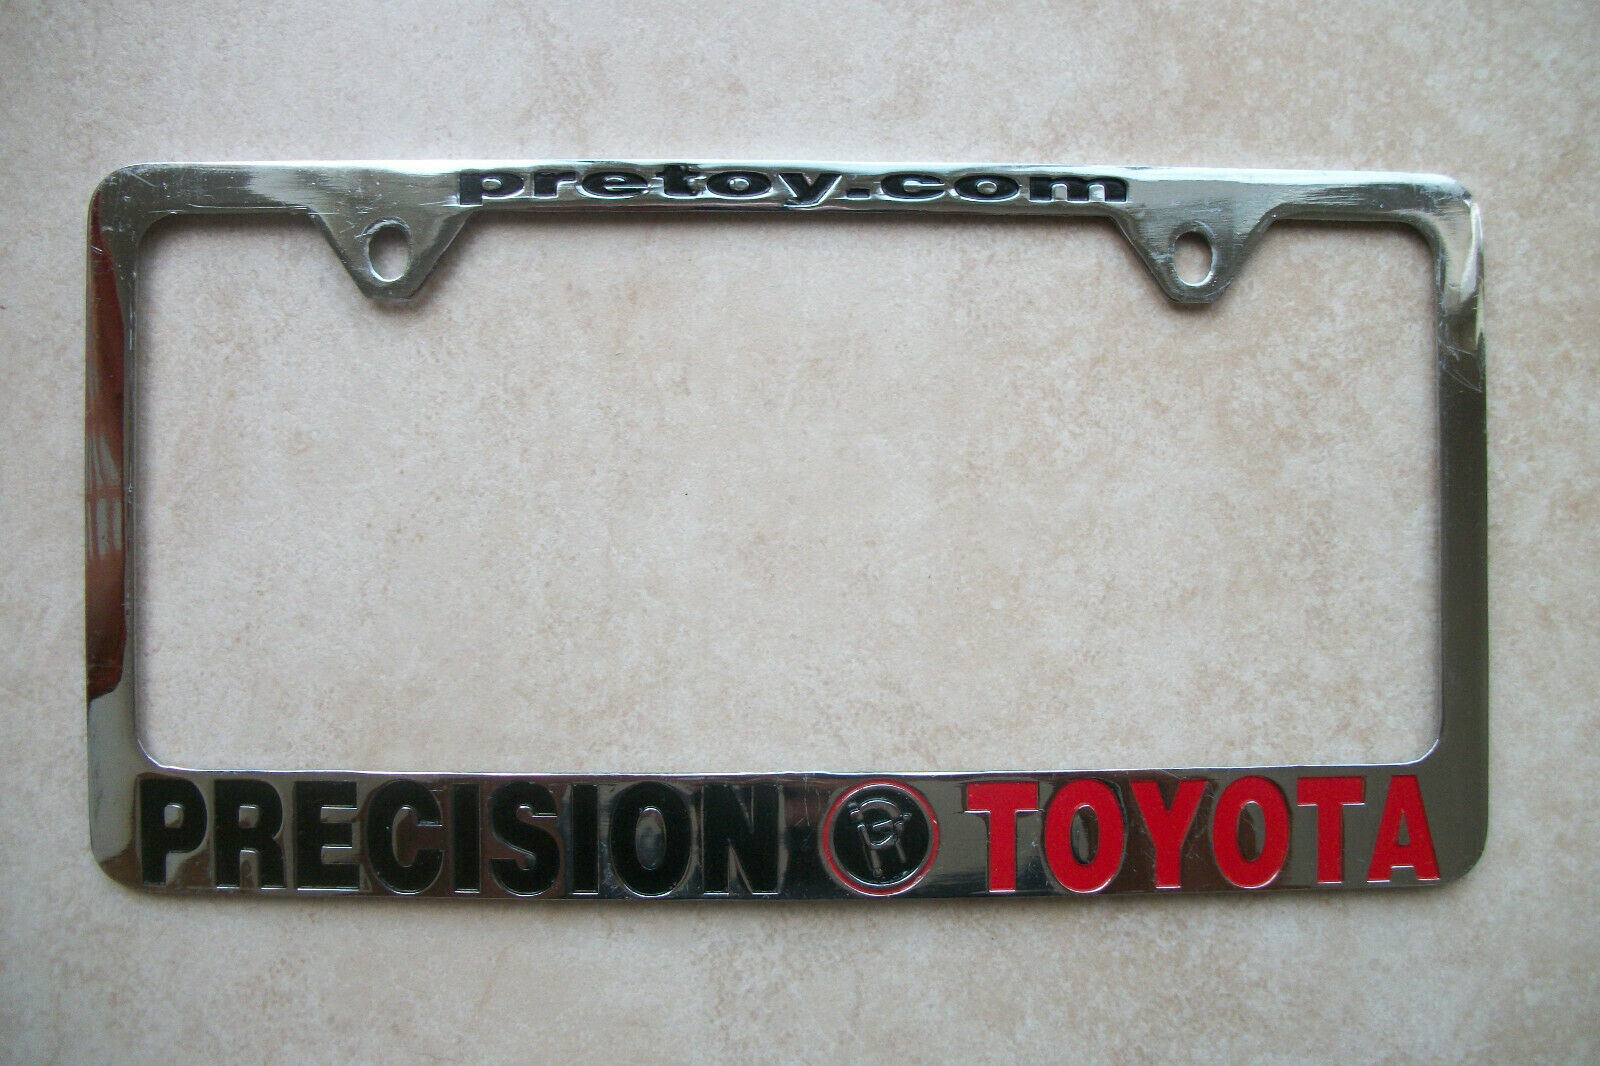 Precision Toyota  License Plate Frame, Tucson Arizona ( Metal).